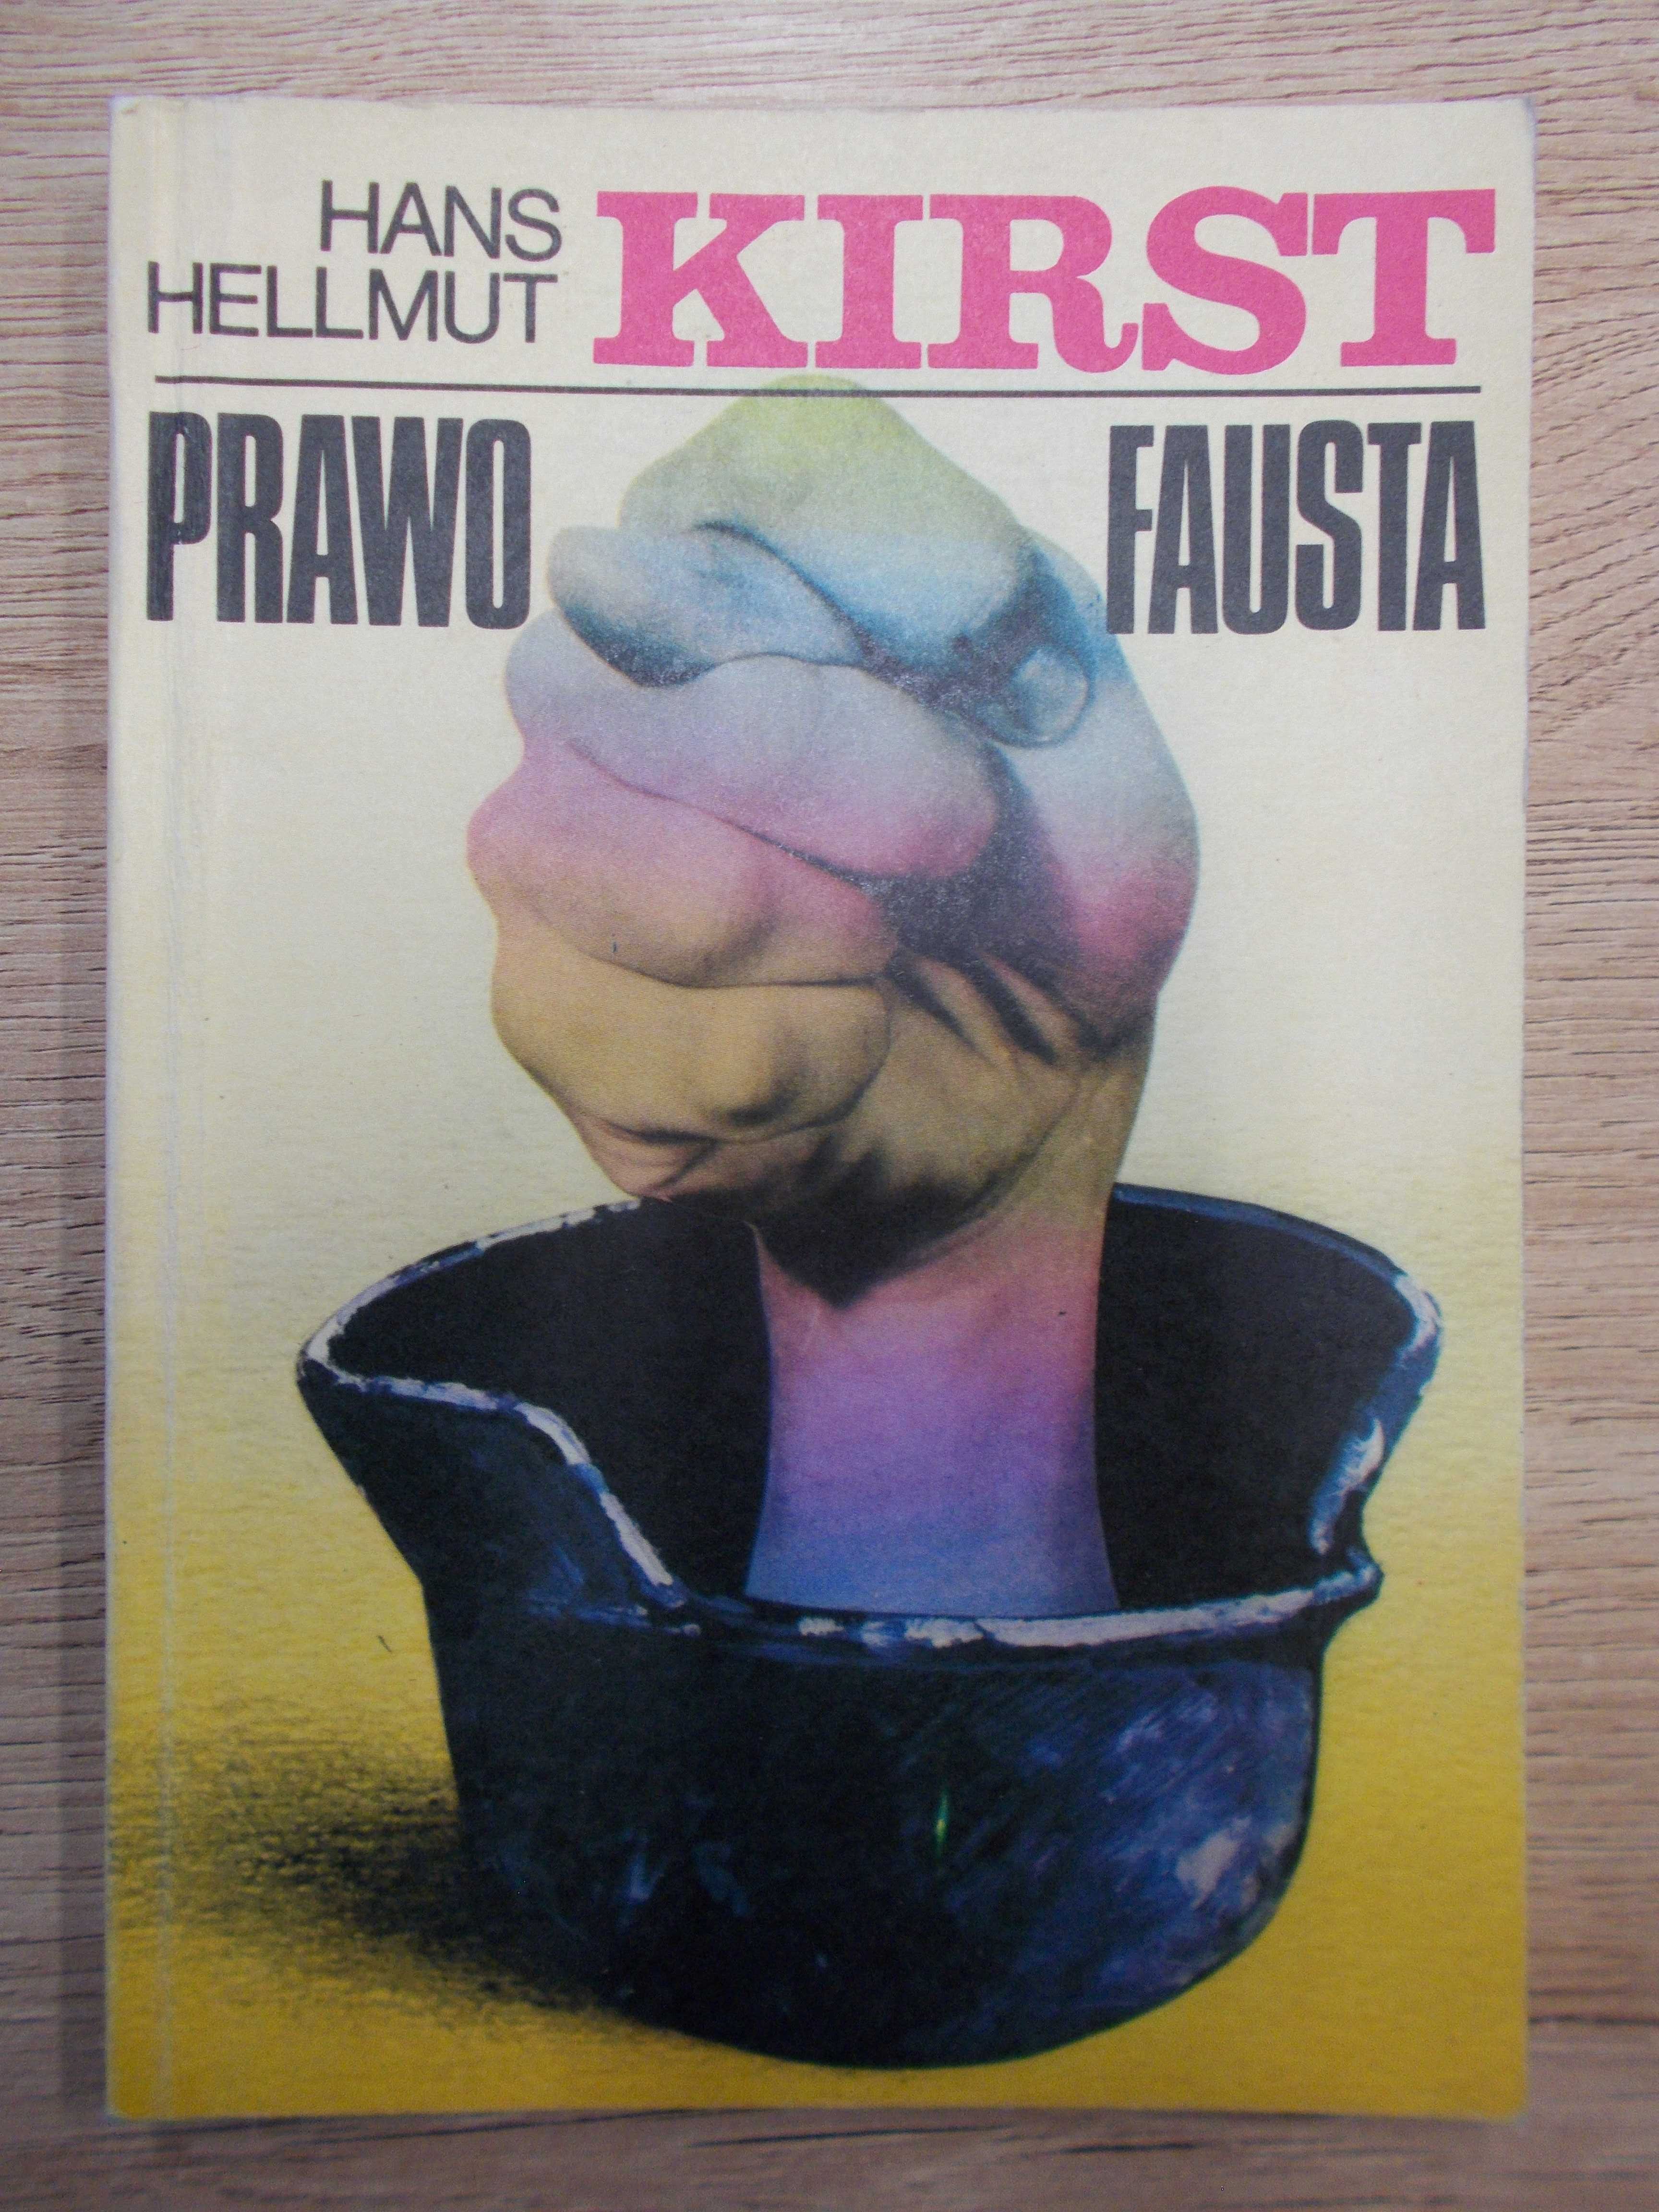 Hans Helmut Kirst - Prawo Fausta - bestseller II wojna światowa